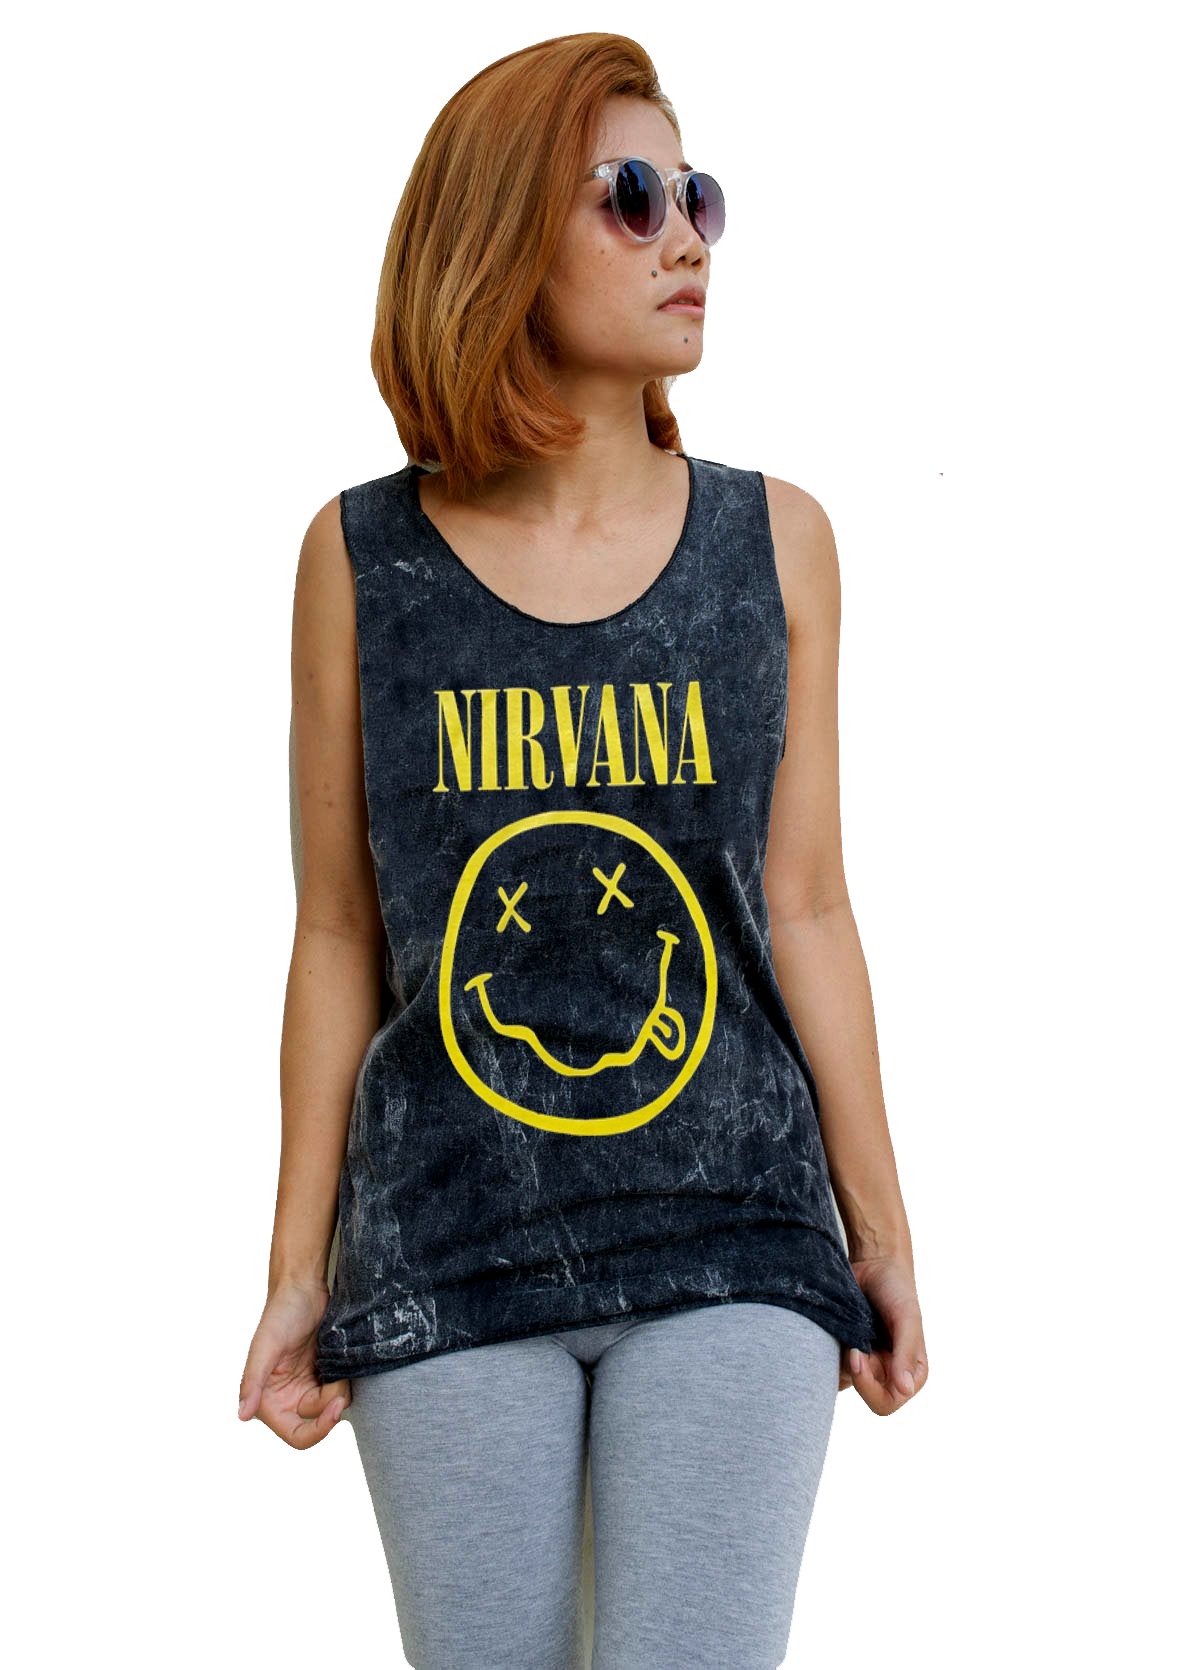 Unisex Nirvana Tank-Top Singlet vest Sleeveless T-shirt